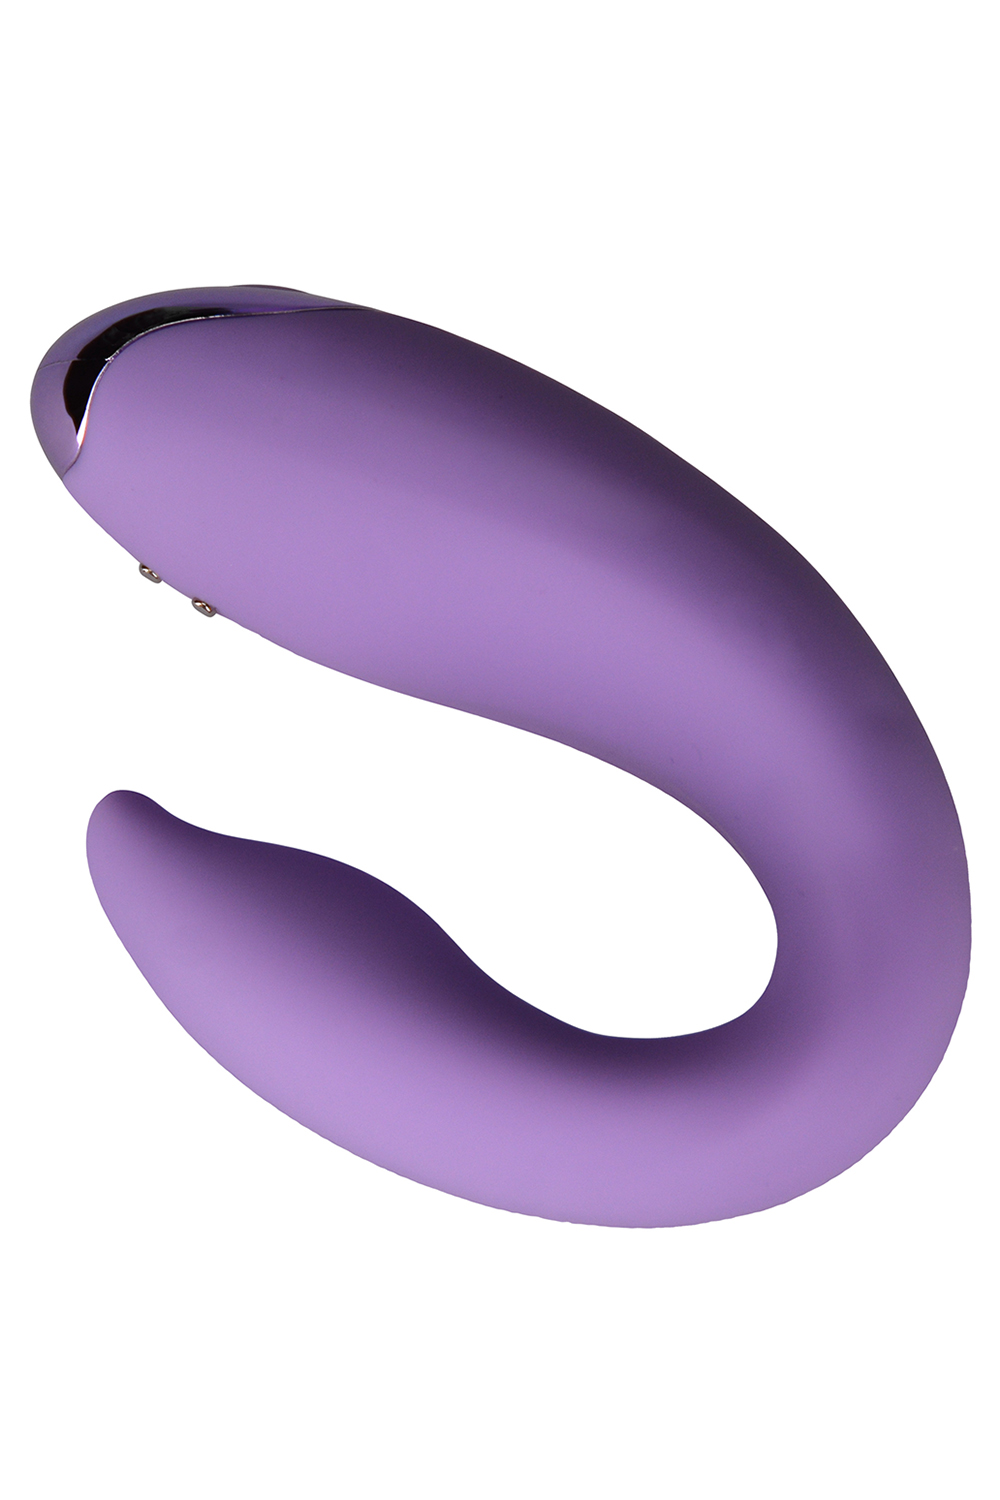 FairyGasm F0001 PleasureBerry Akcesoria erotyczne wibrator, violet